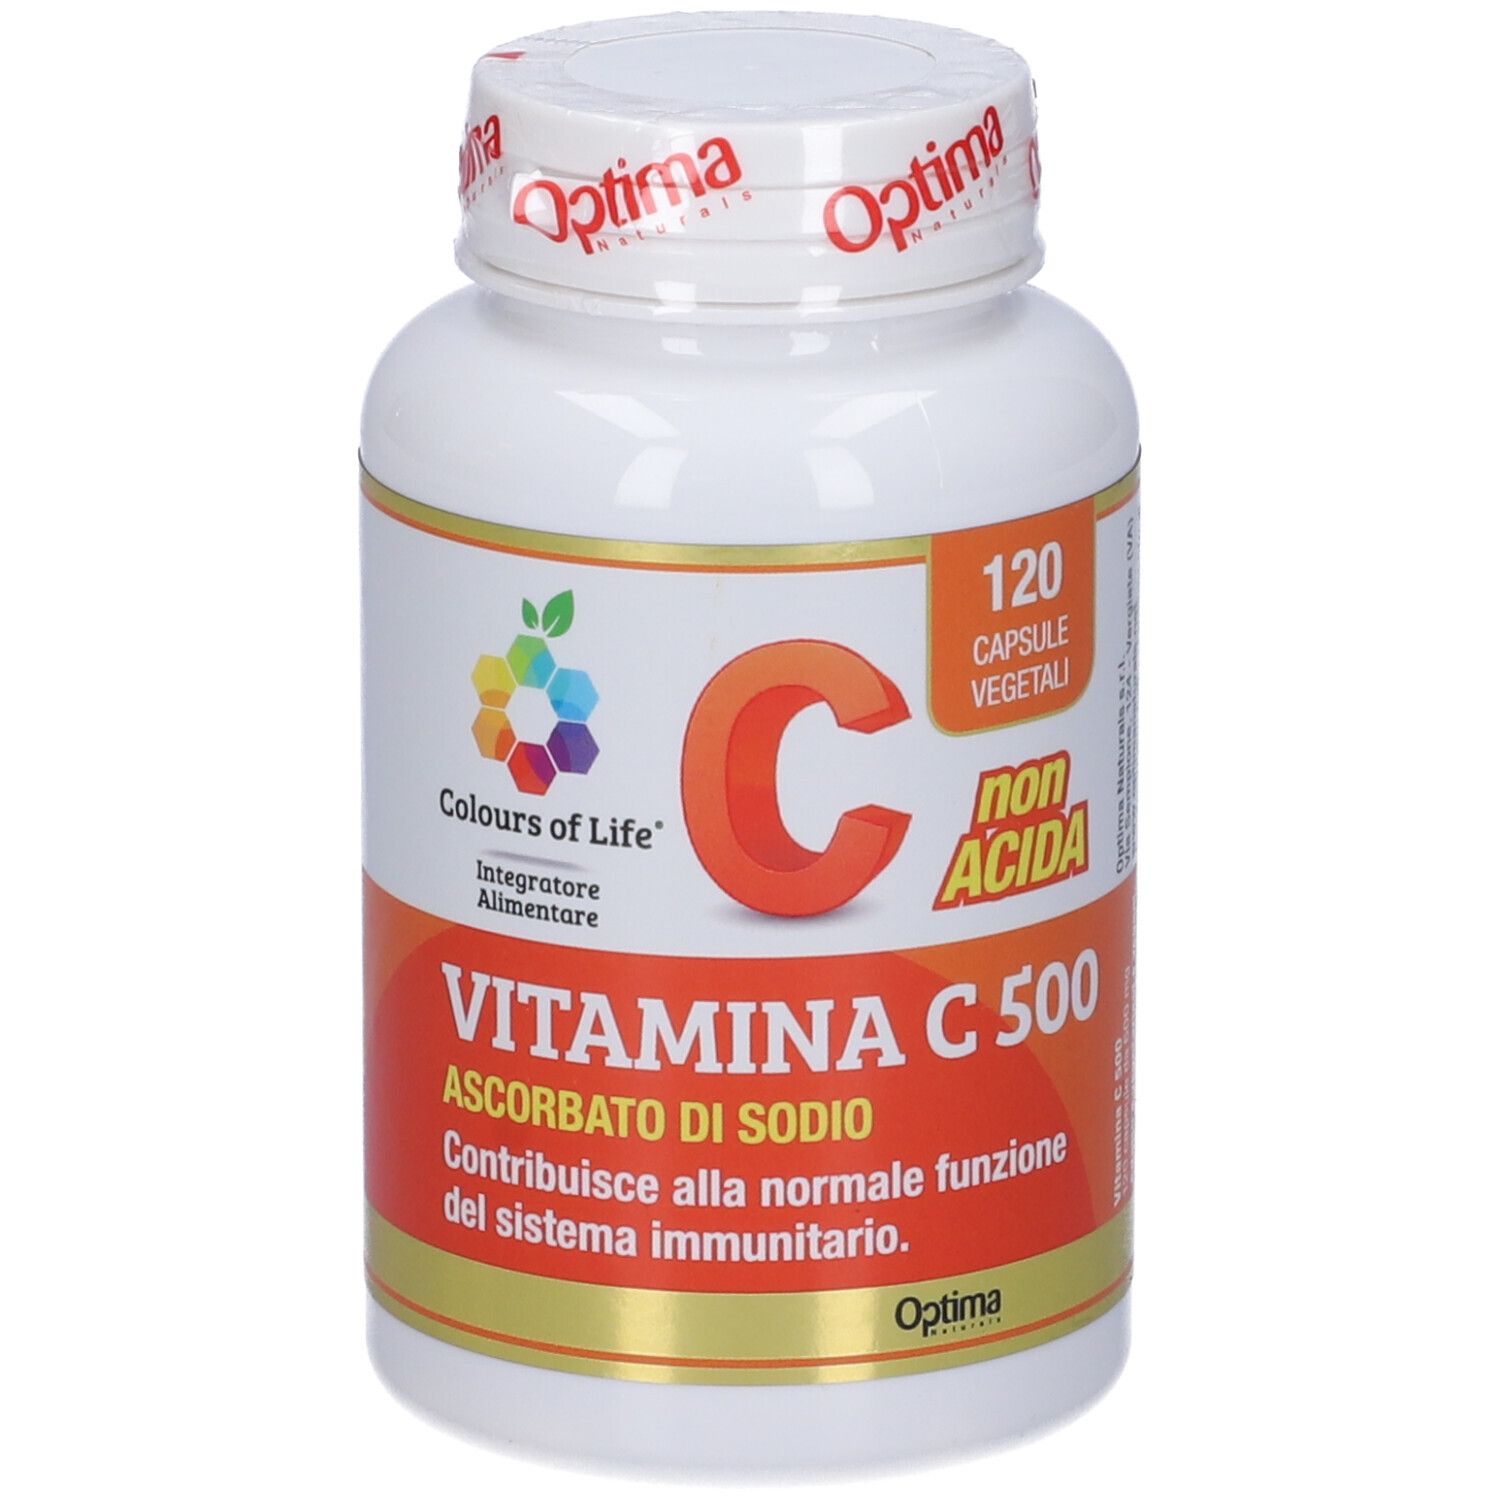 Colours of Life® Vitamina C 500